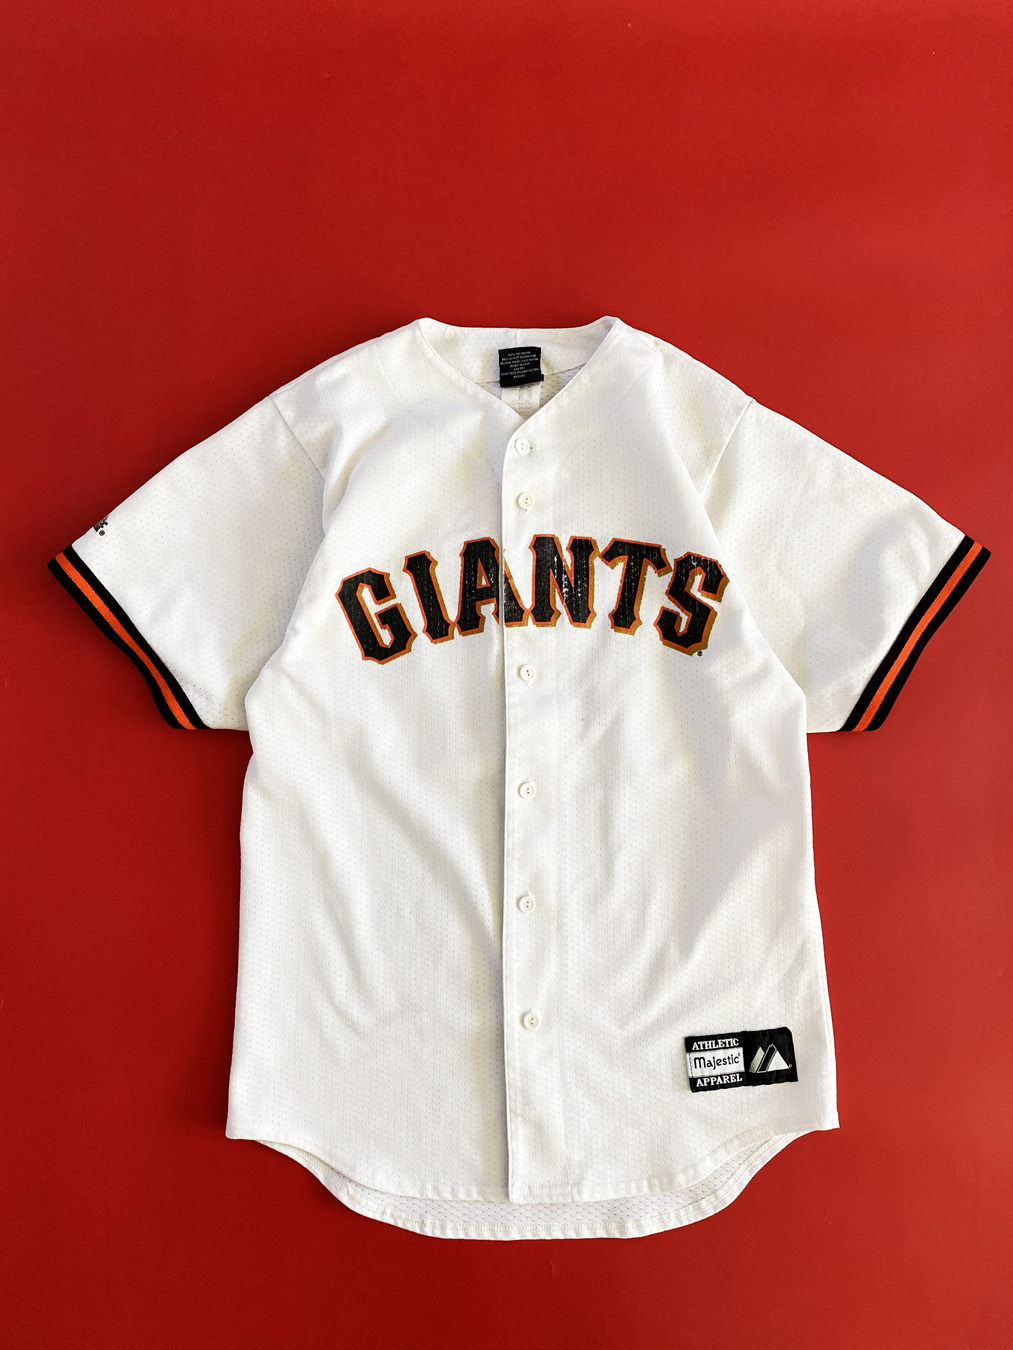 Barry Bonds Jersey - San Francisco Giants 2002 Alternate Throwback MLB  Baseball Jersey